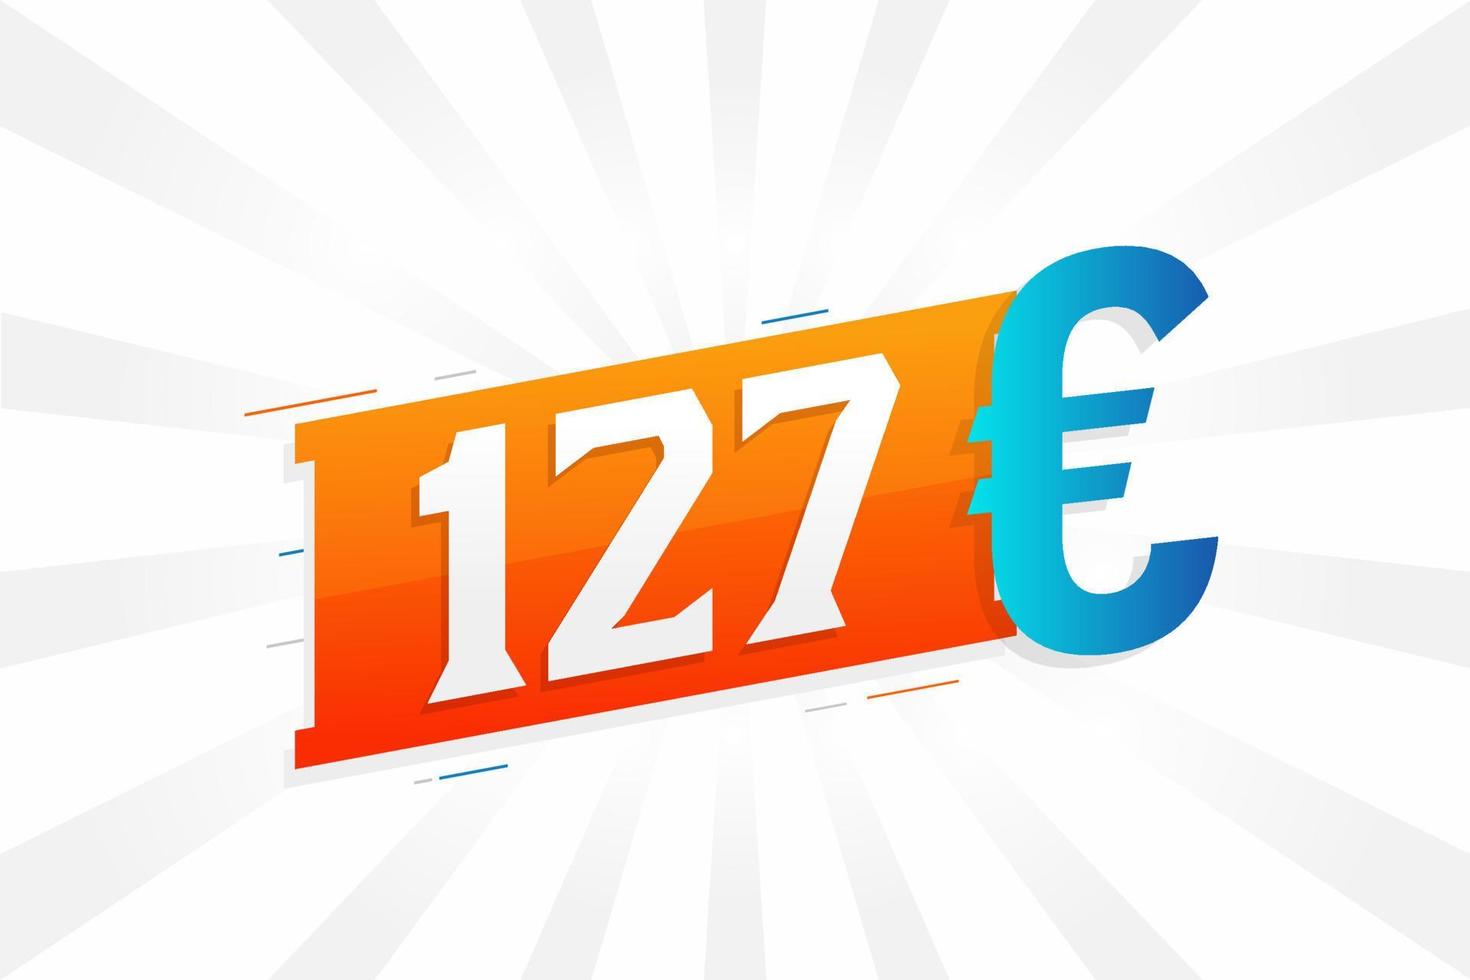 Símbolo de texto vectorial de moneda de 127 euros. 127 euros vector de stock de dinero de la unión europea